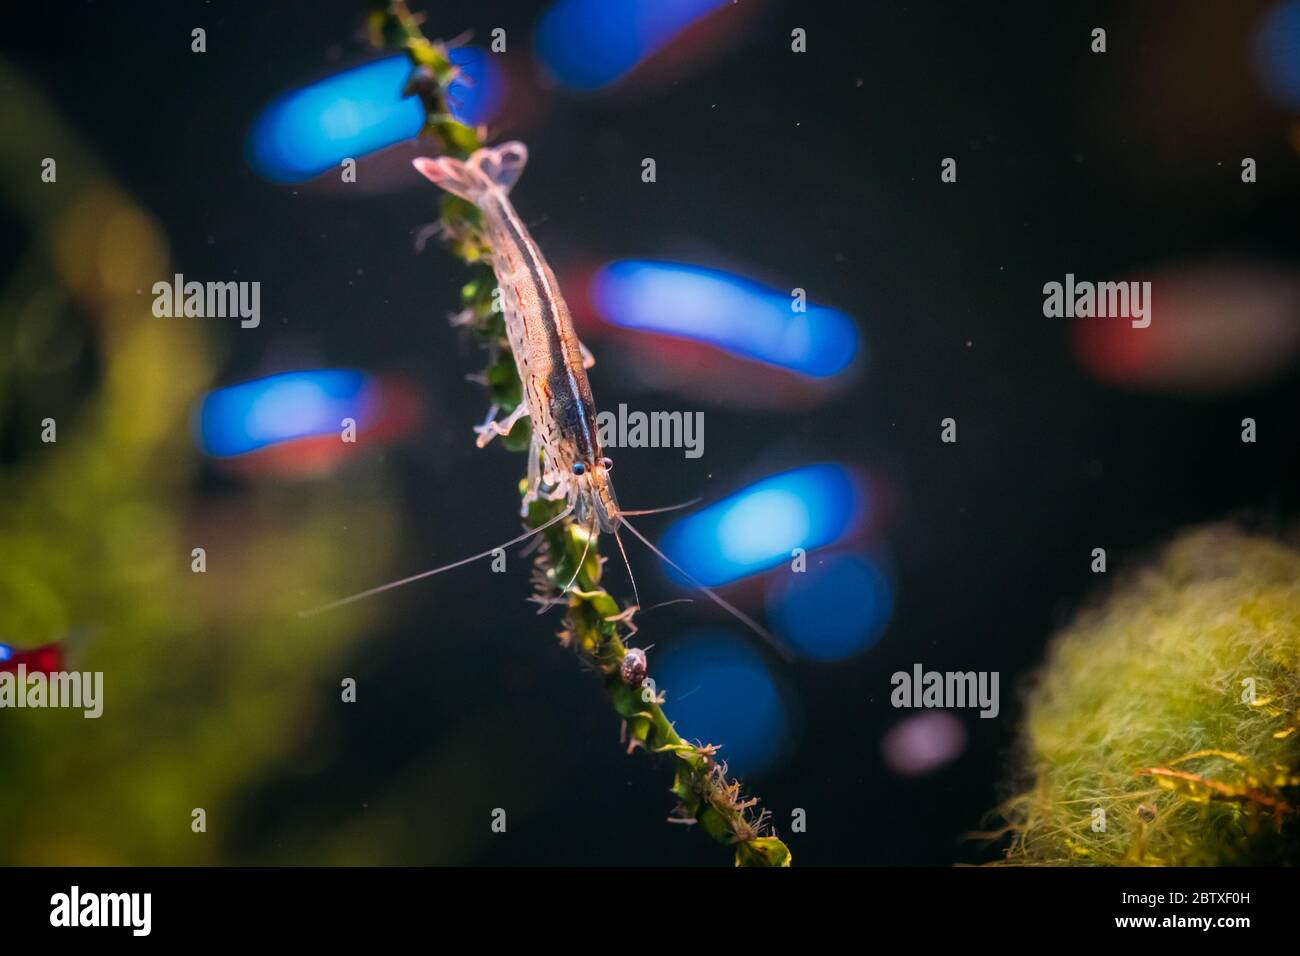 Amano Shrimp Or Japanese Shrimp Swimming In Water. Stock Photo